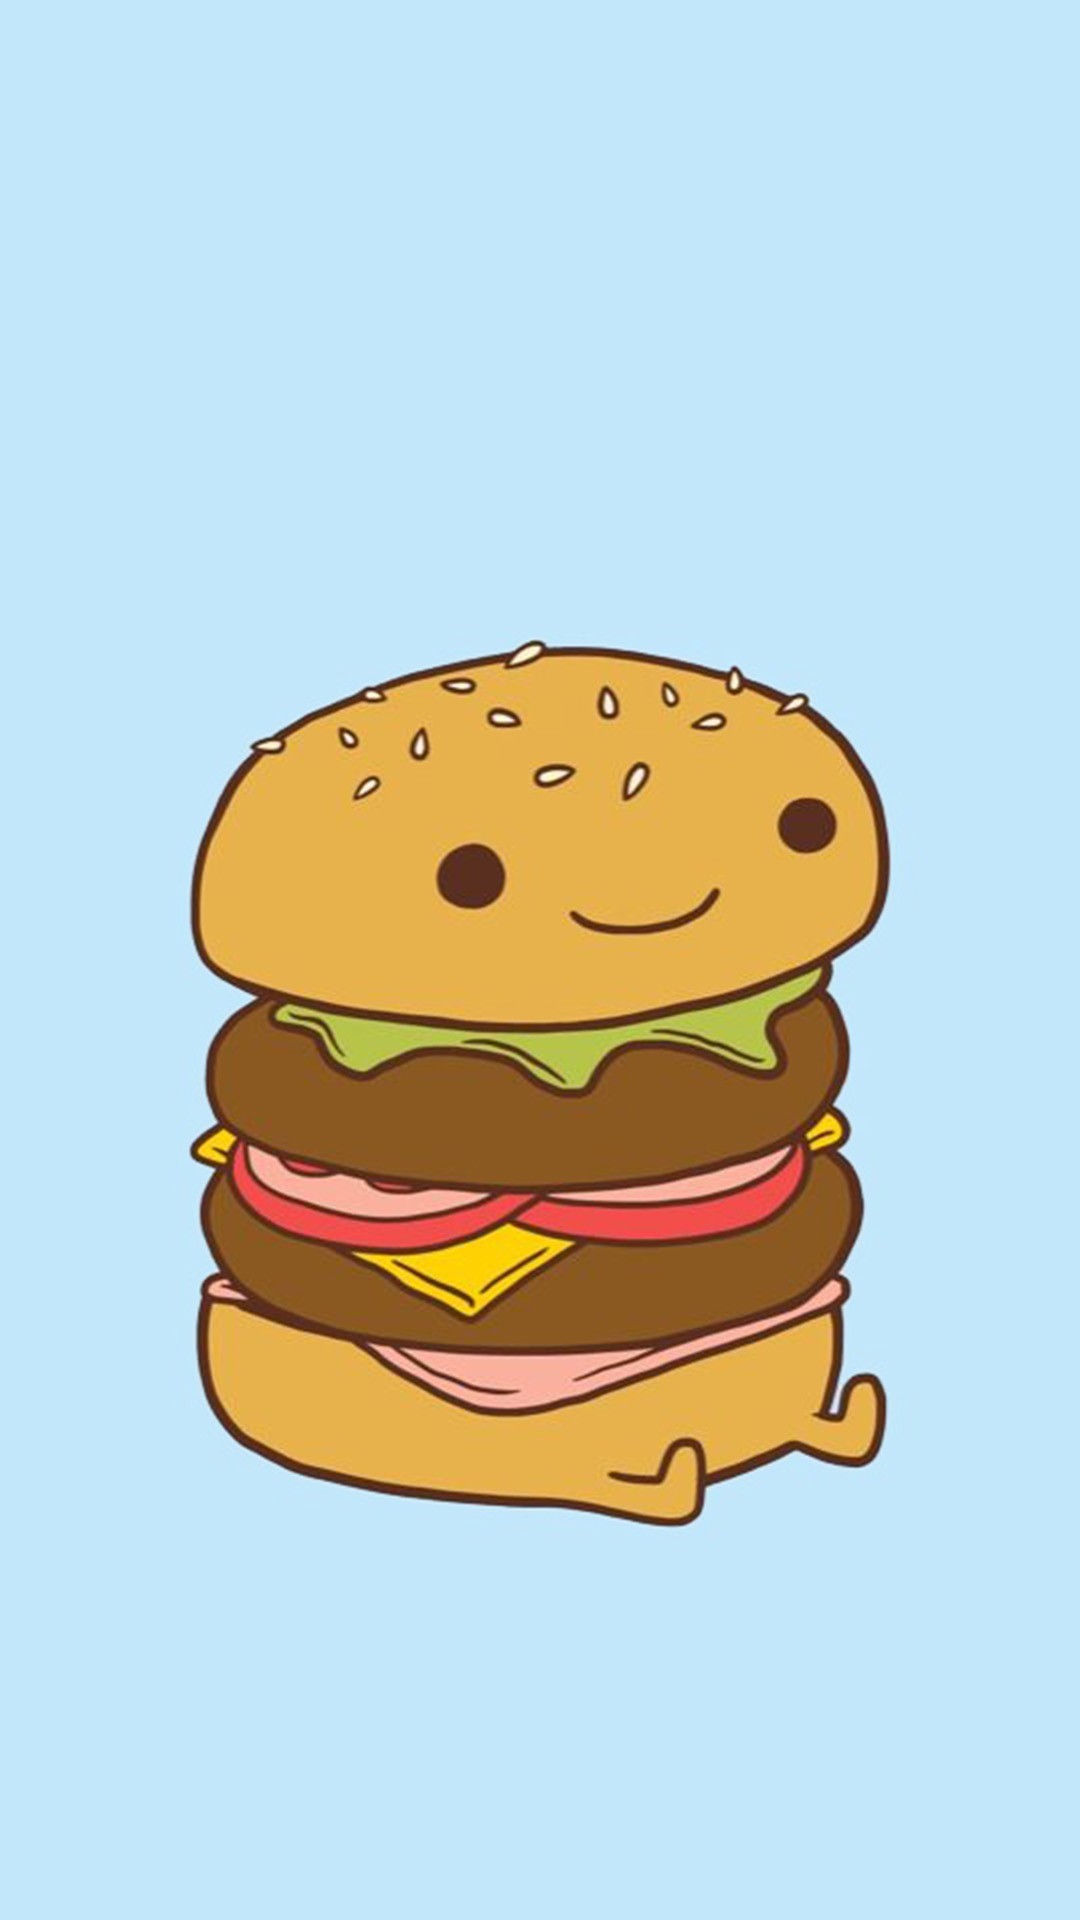 Burger Wallpaper 1 - Cartoon Food - HD Wallpaper 